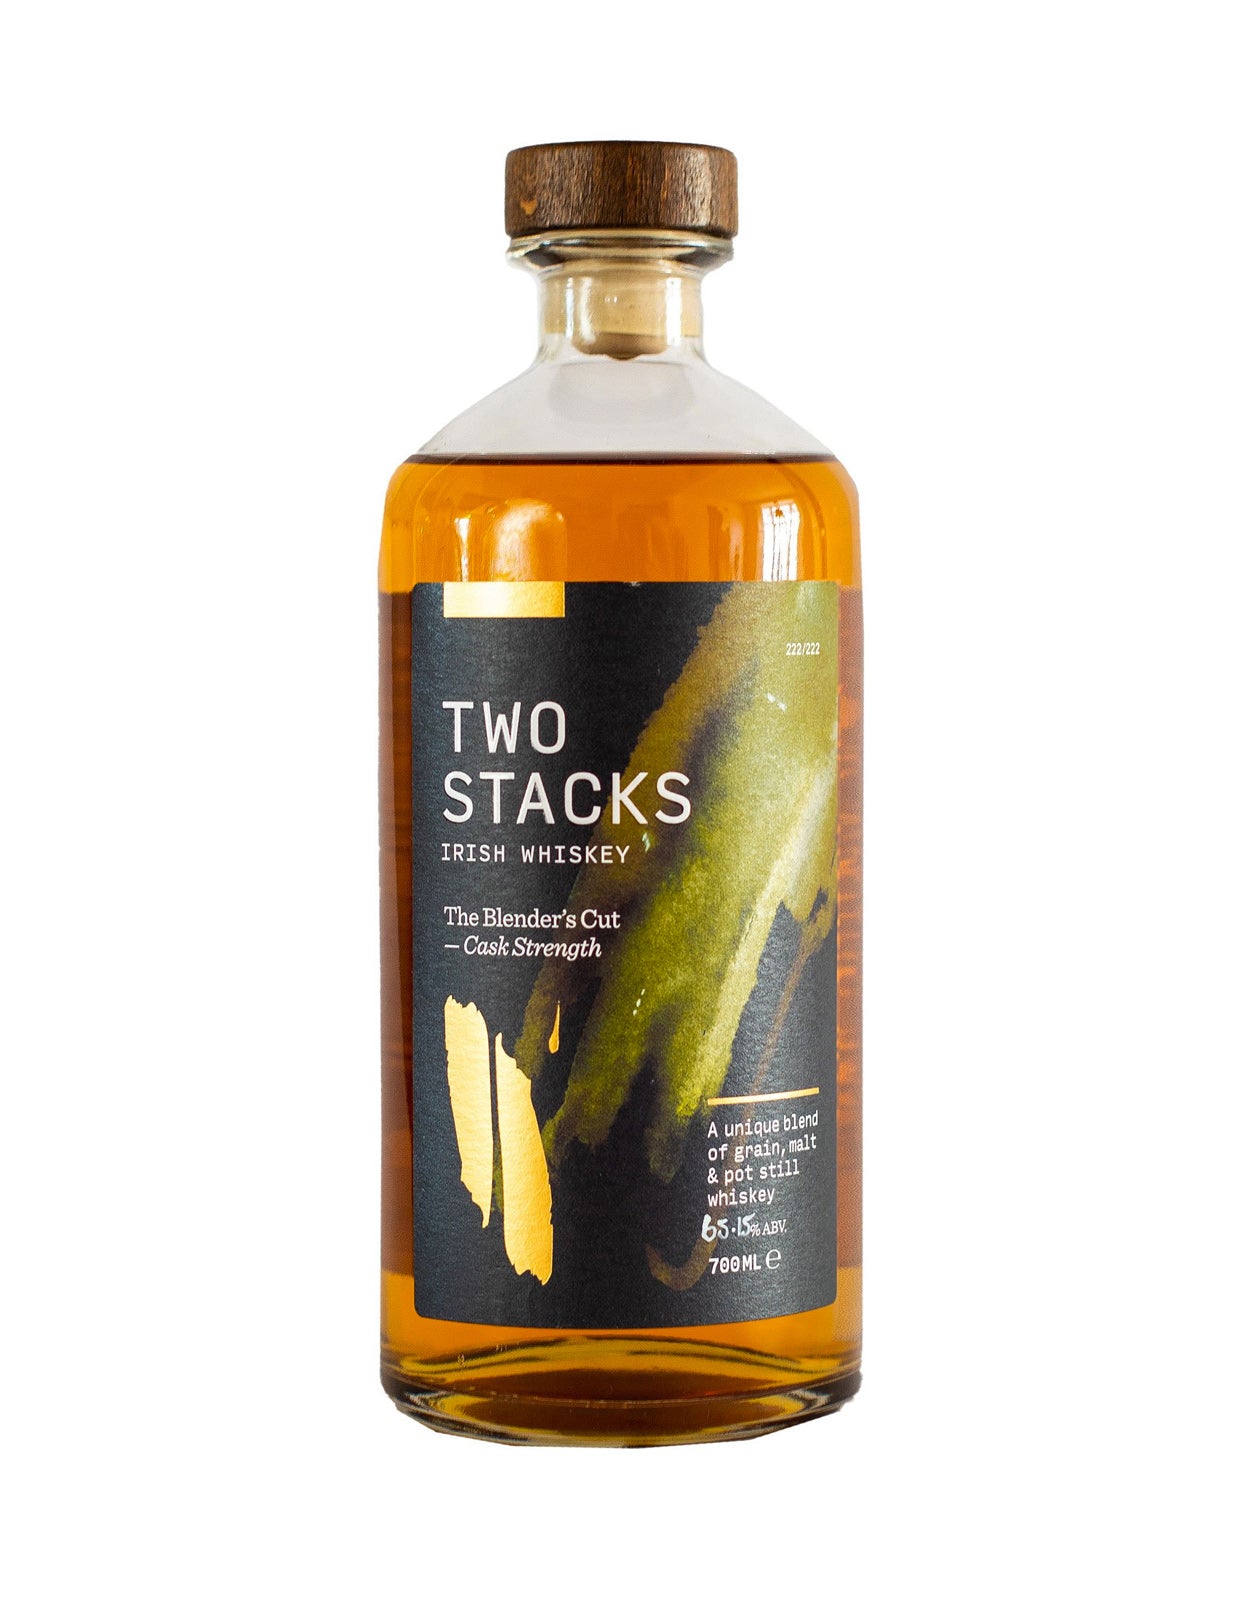 Two Stacks "The Blenders Cut" Cask Strength Irish Whiskey